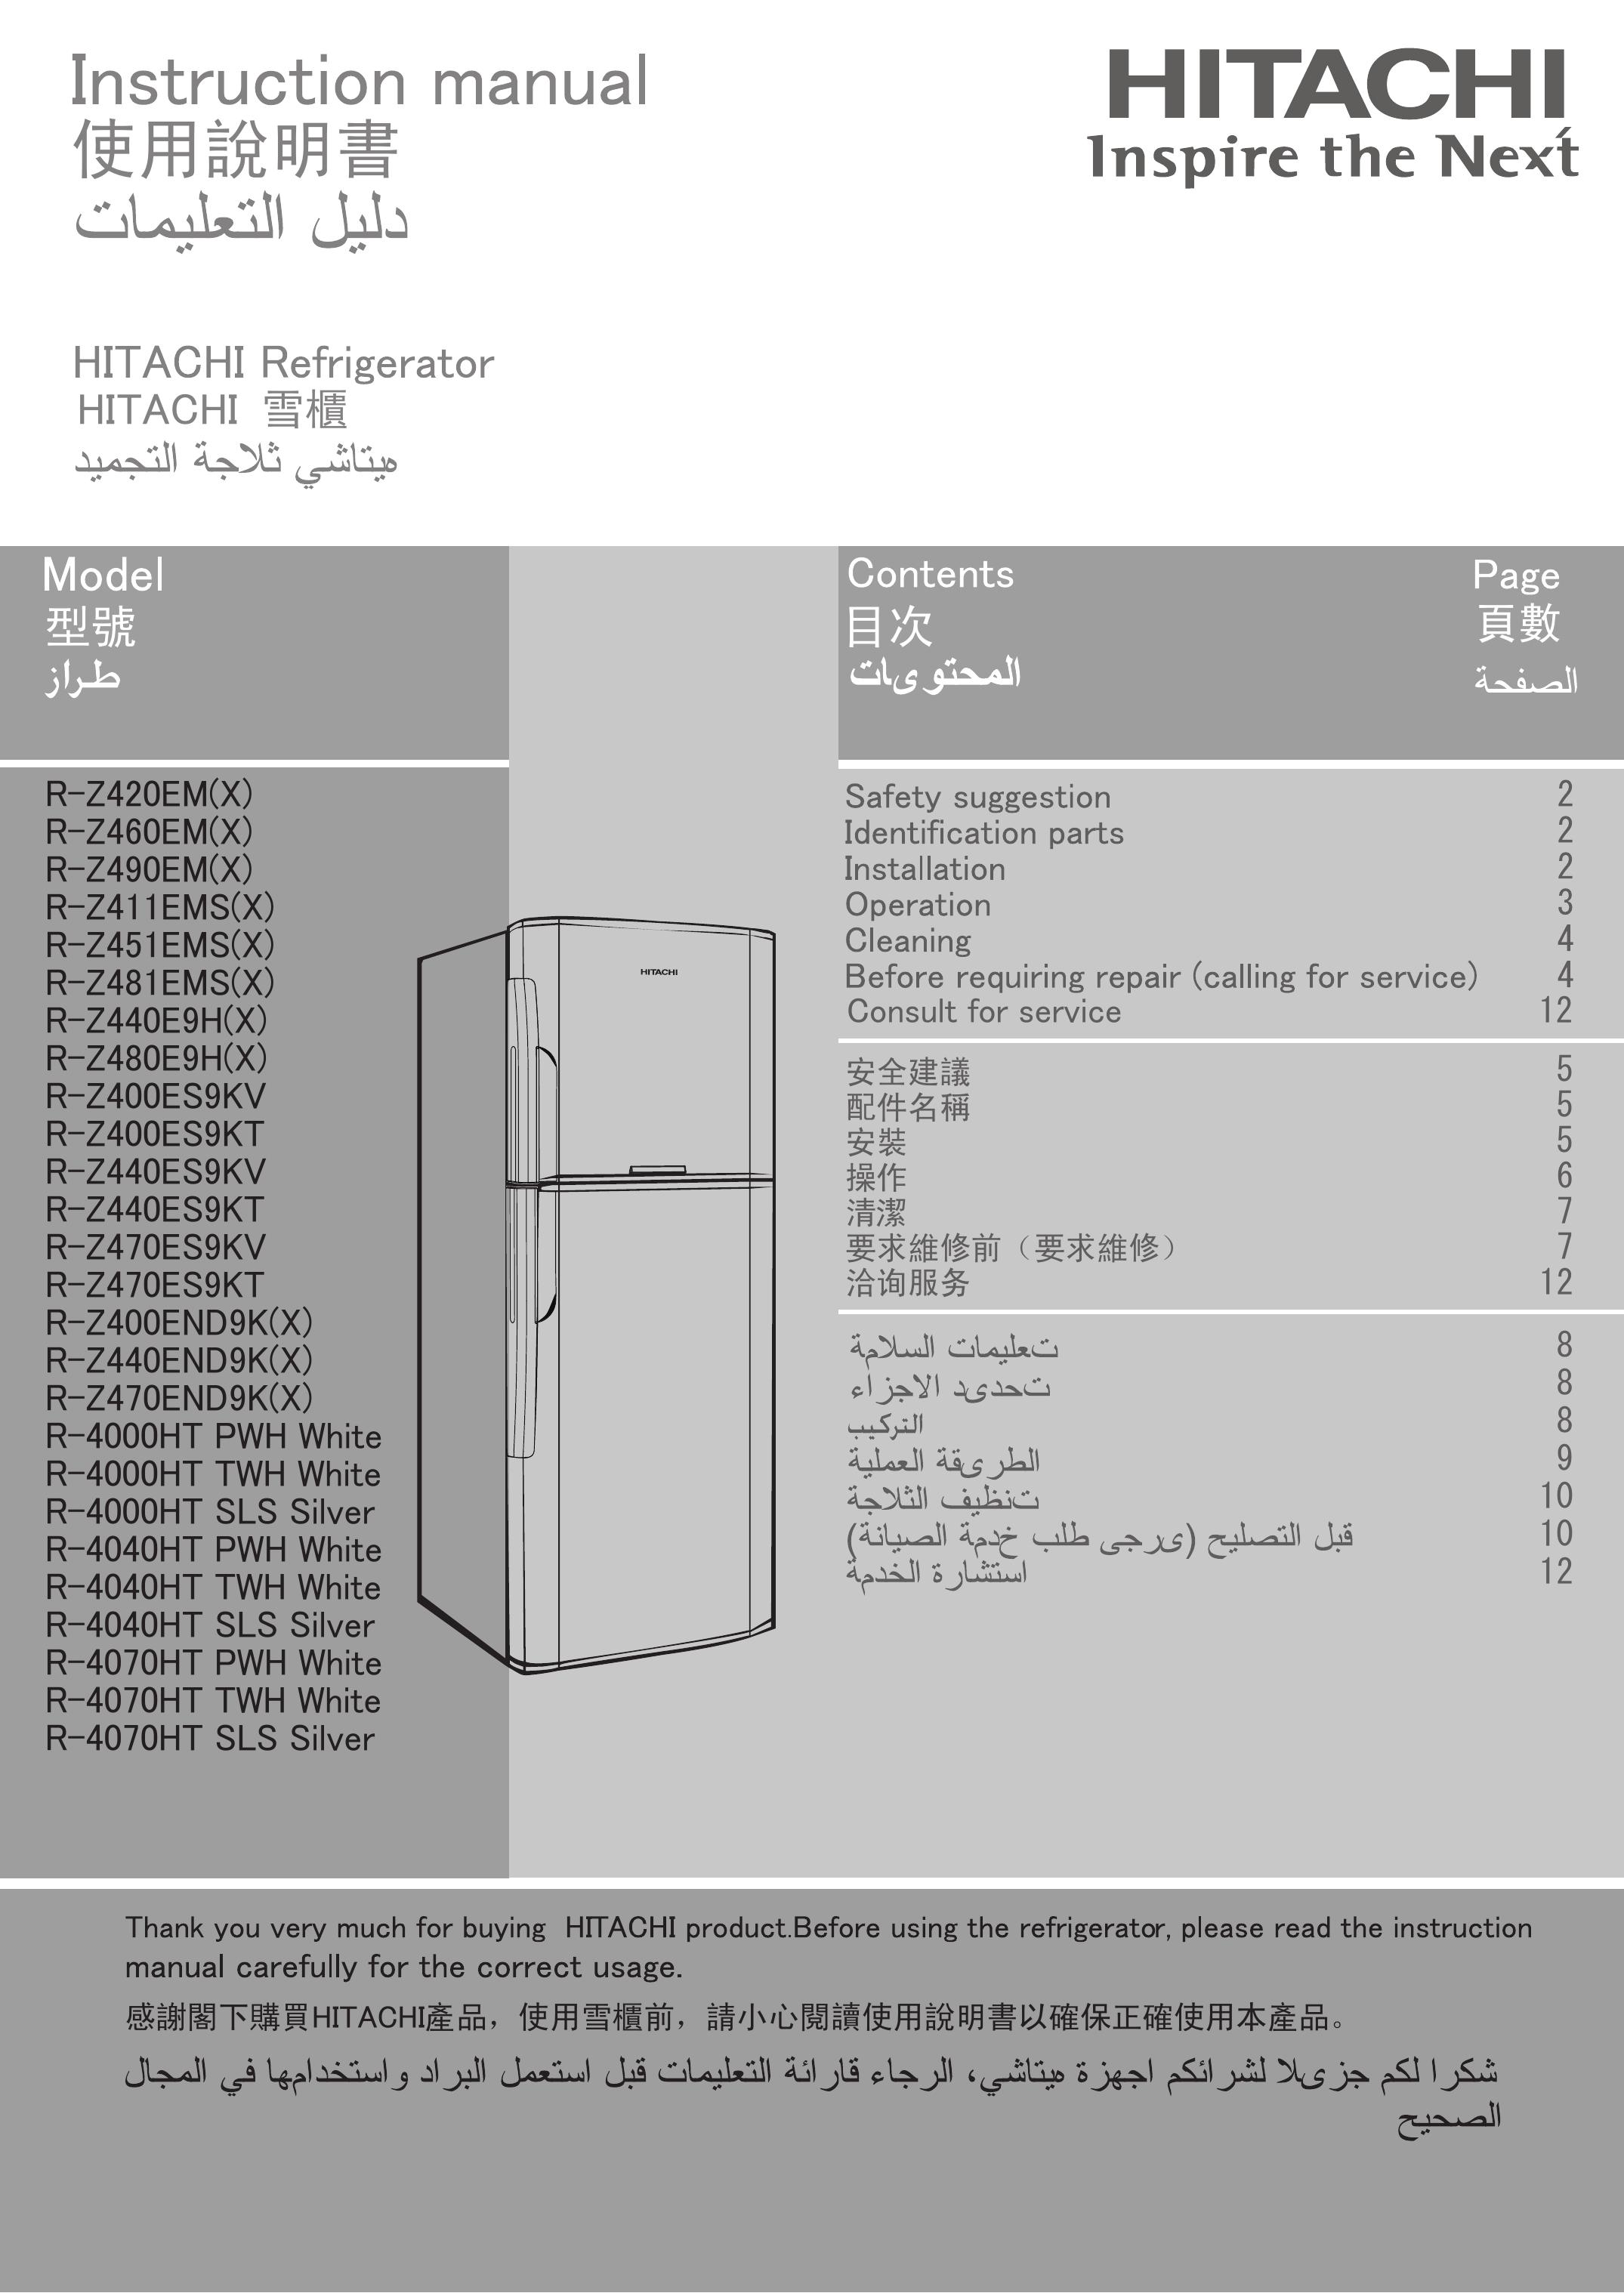 Hitachi R-4070HT TWH White Refrigerator User Manual